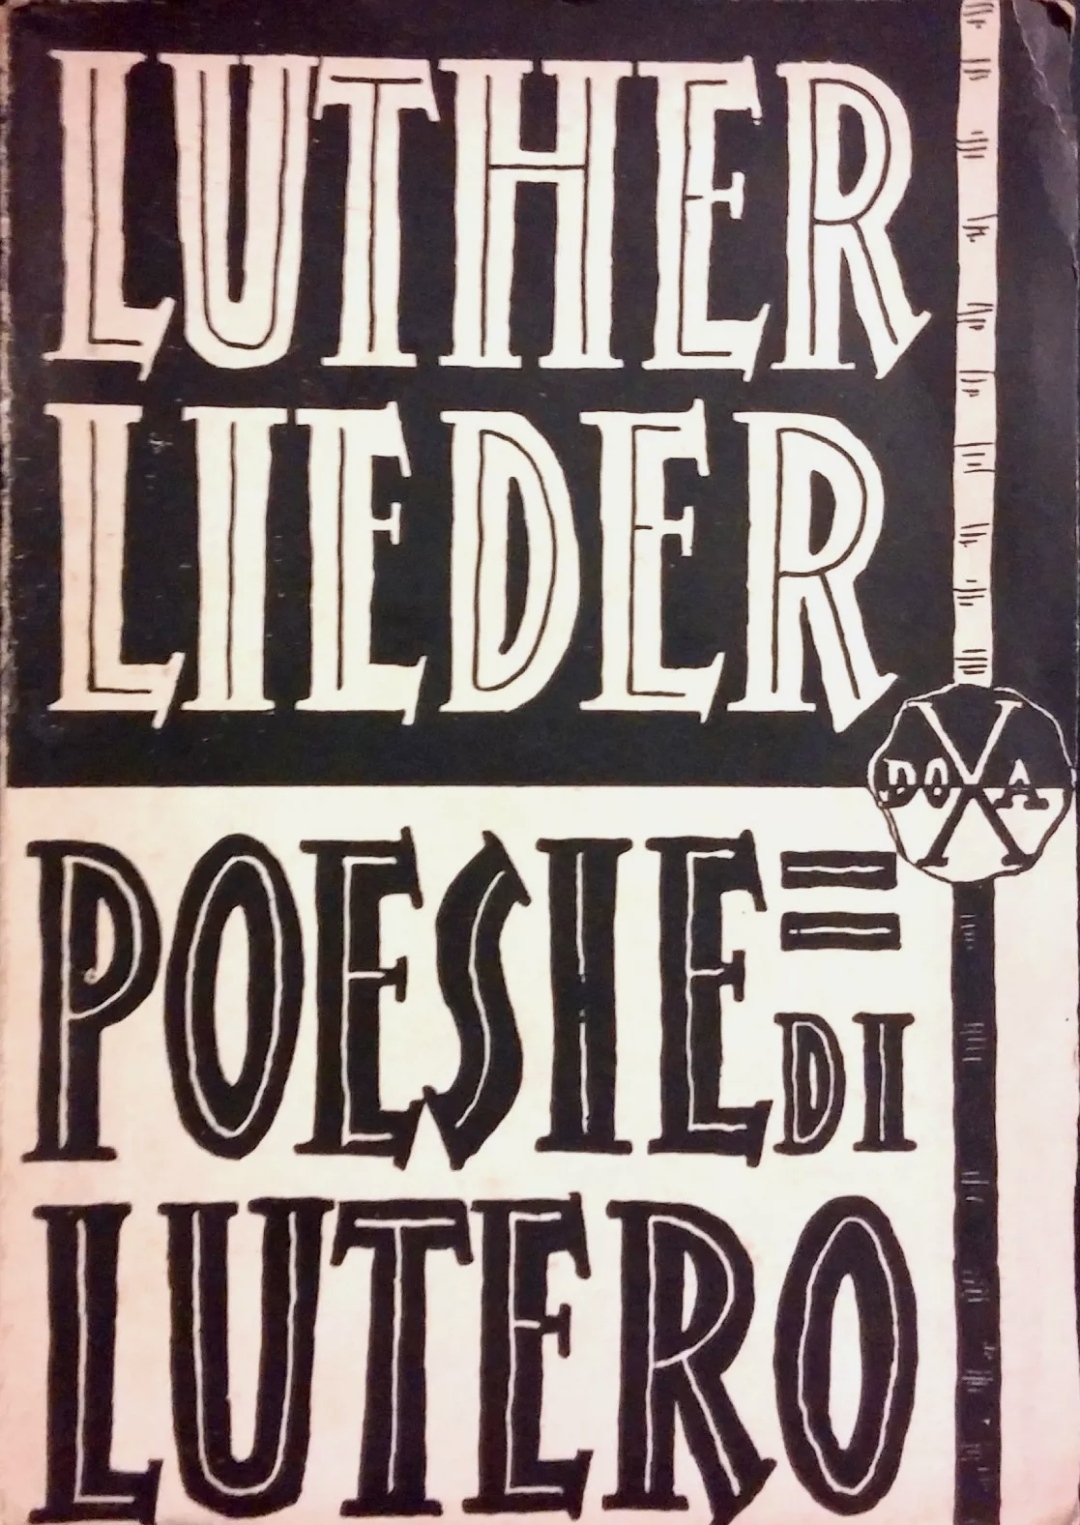 POESIE DI LUTERO di LUTHER LIEDER, Arti grafiche Ugo Pinnarò, 1930